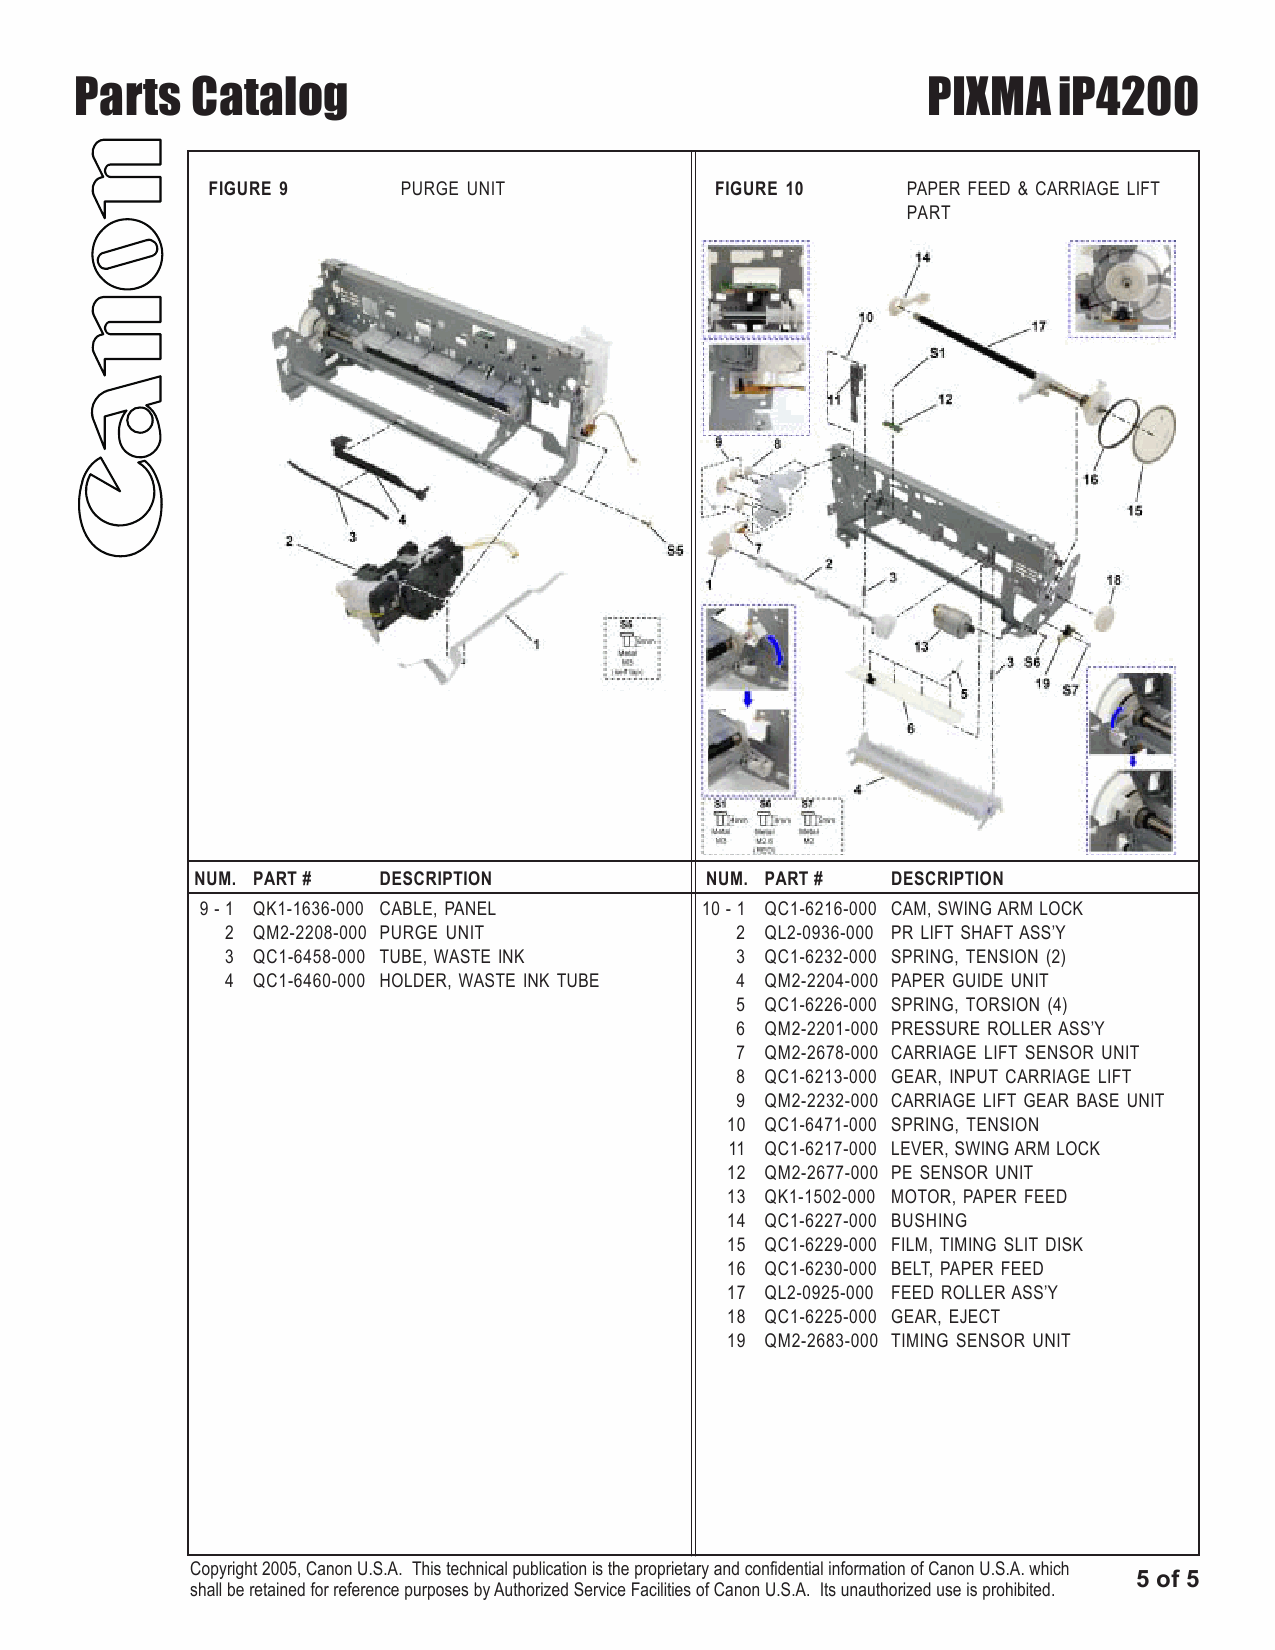 Canon PIXMA iP4200 Parts Catalog